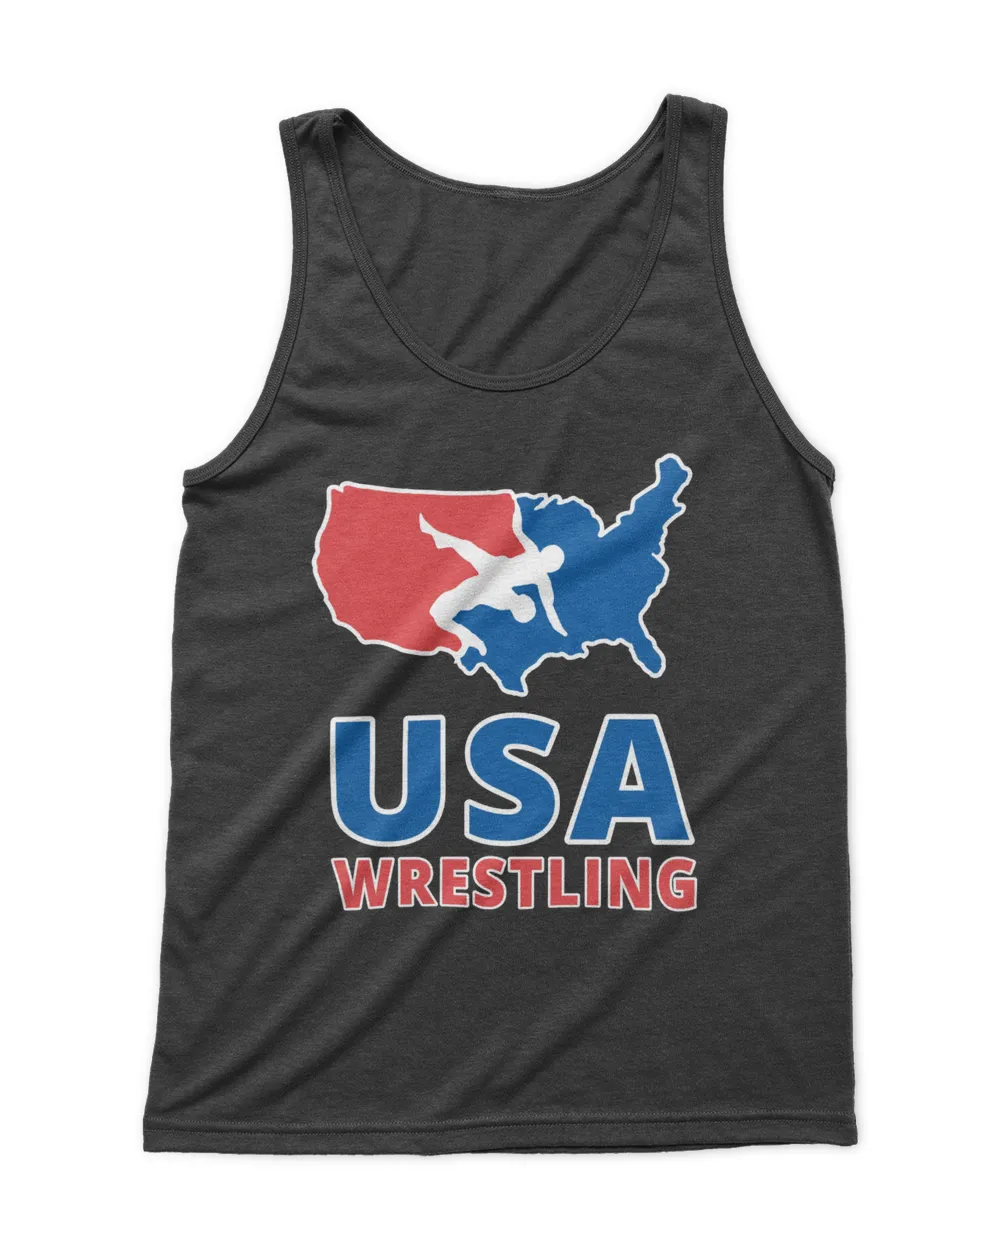 Usa Wrestling T-Shirt